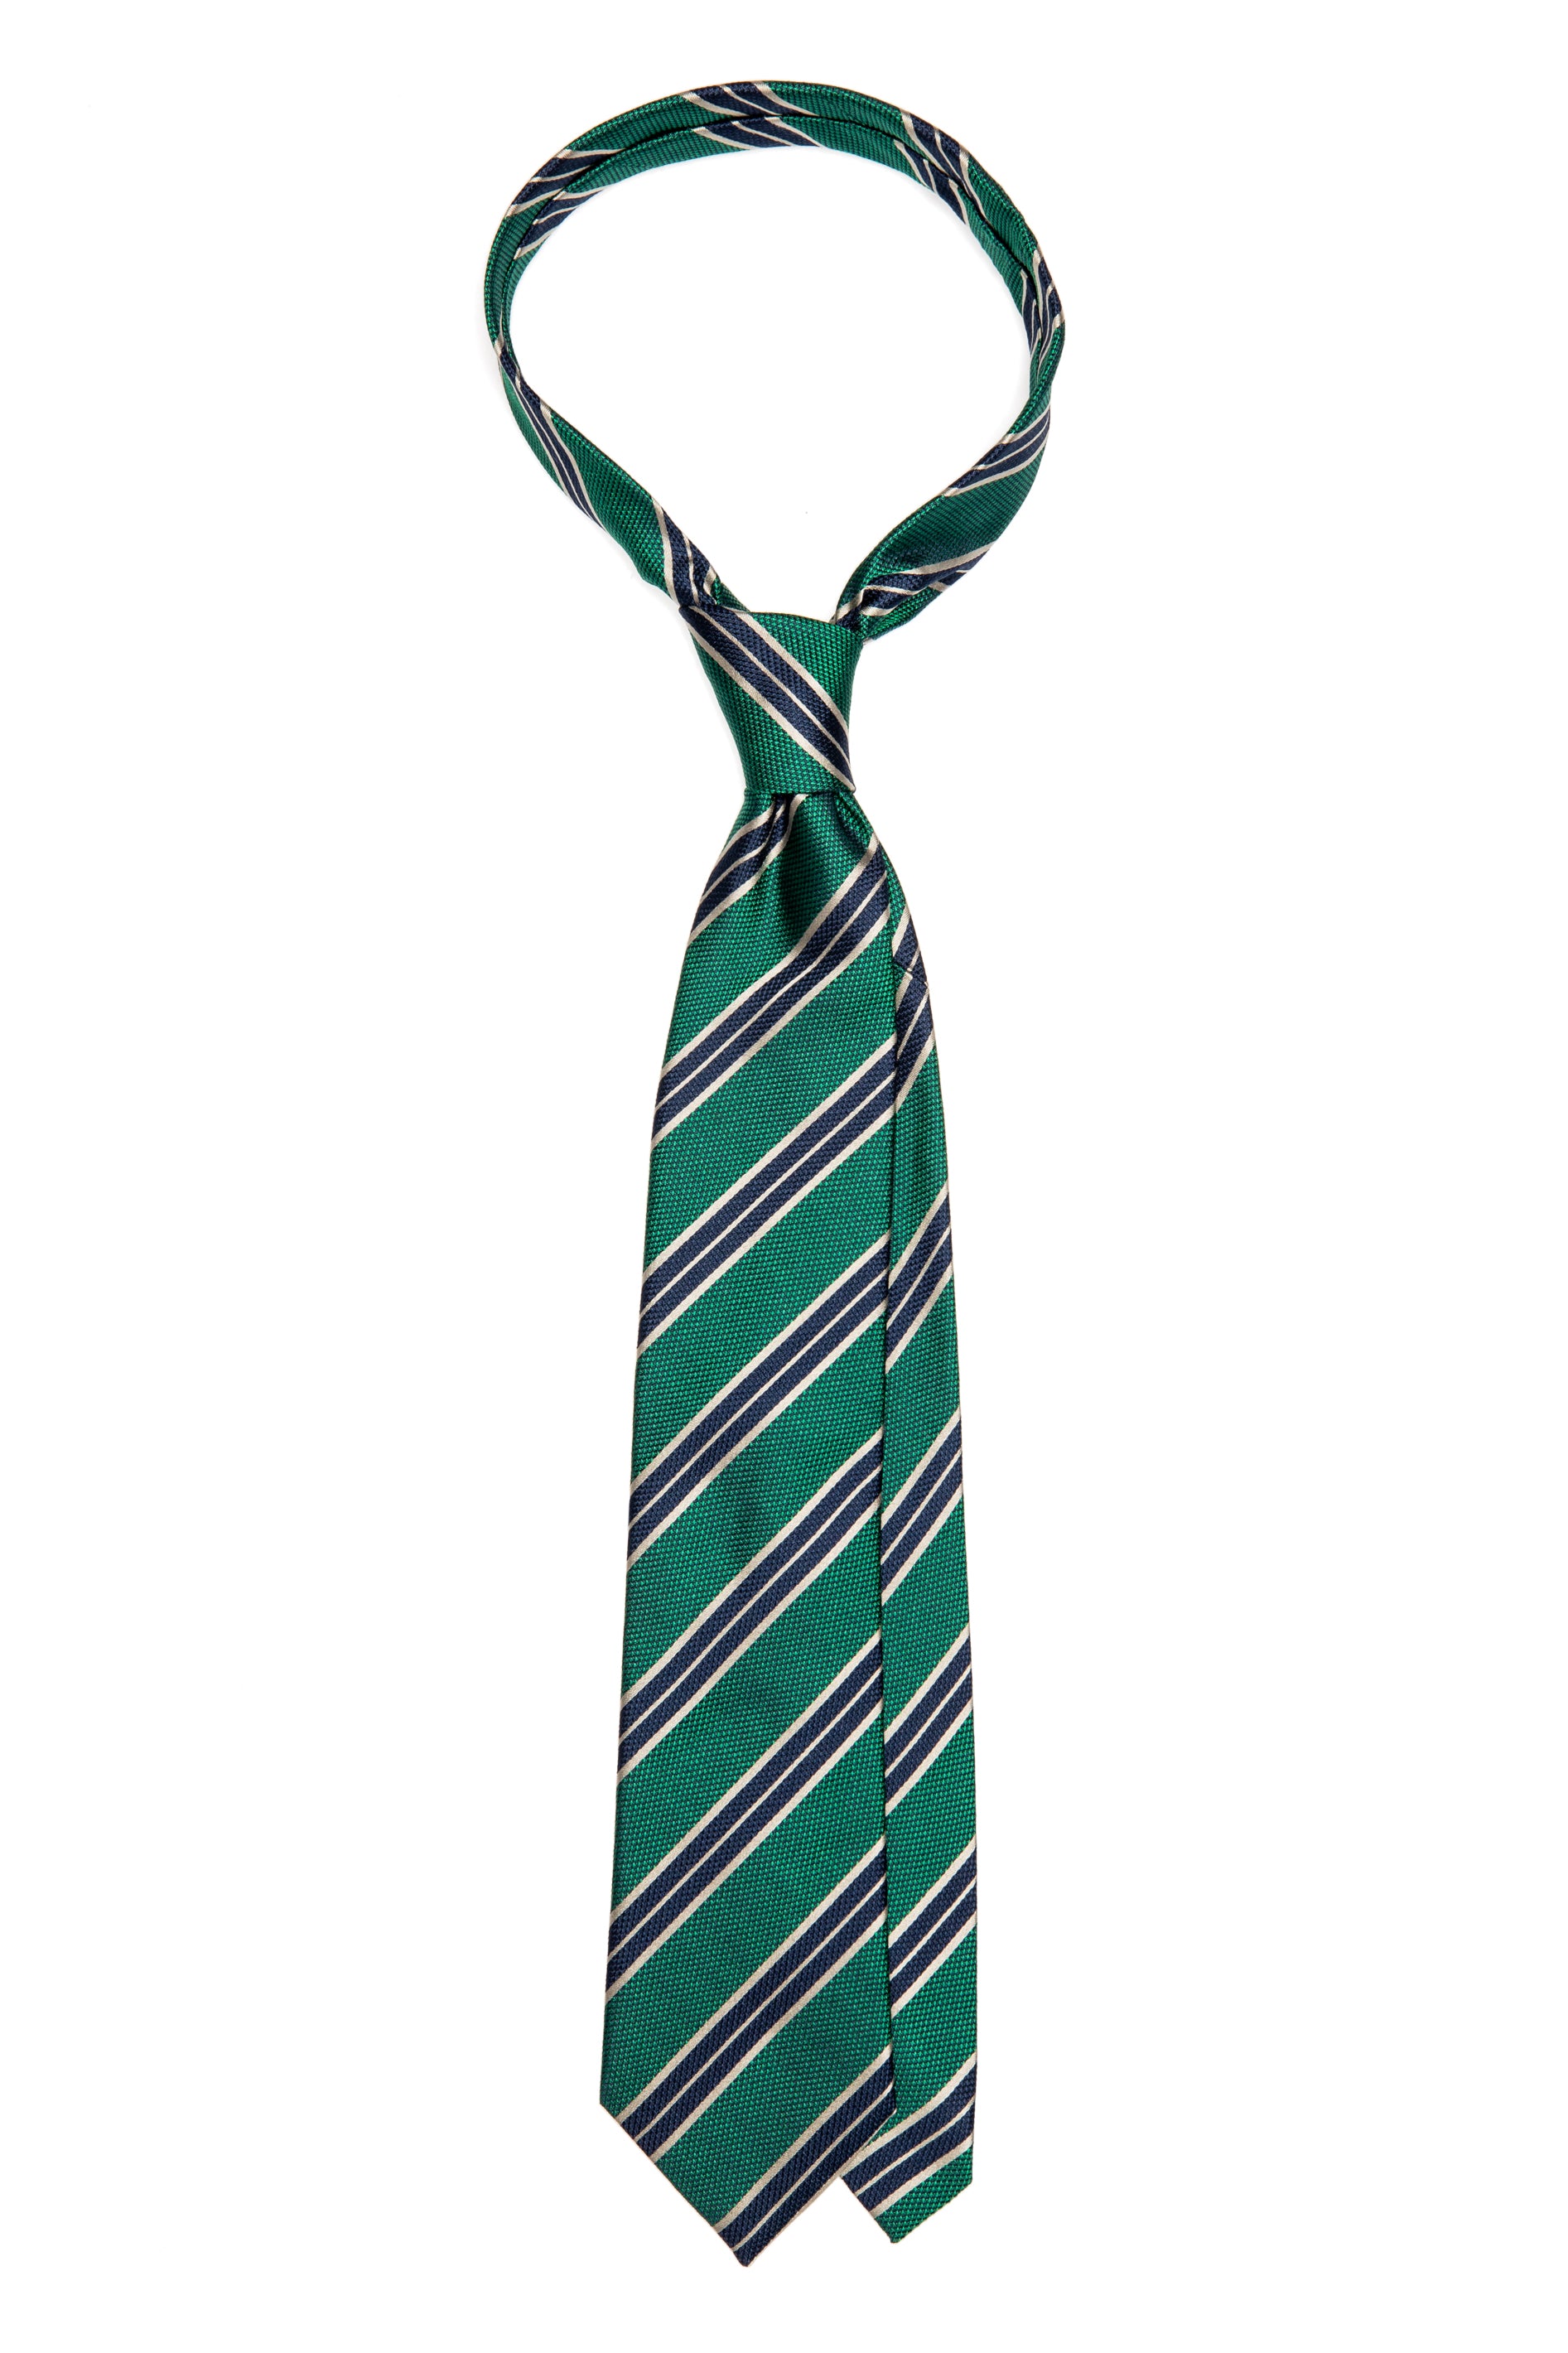 Green silk tie with stripes